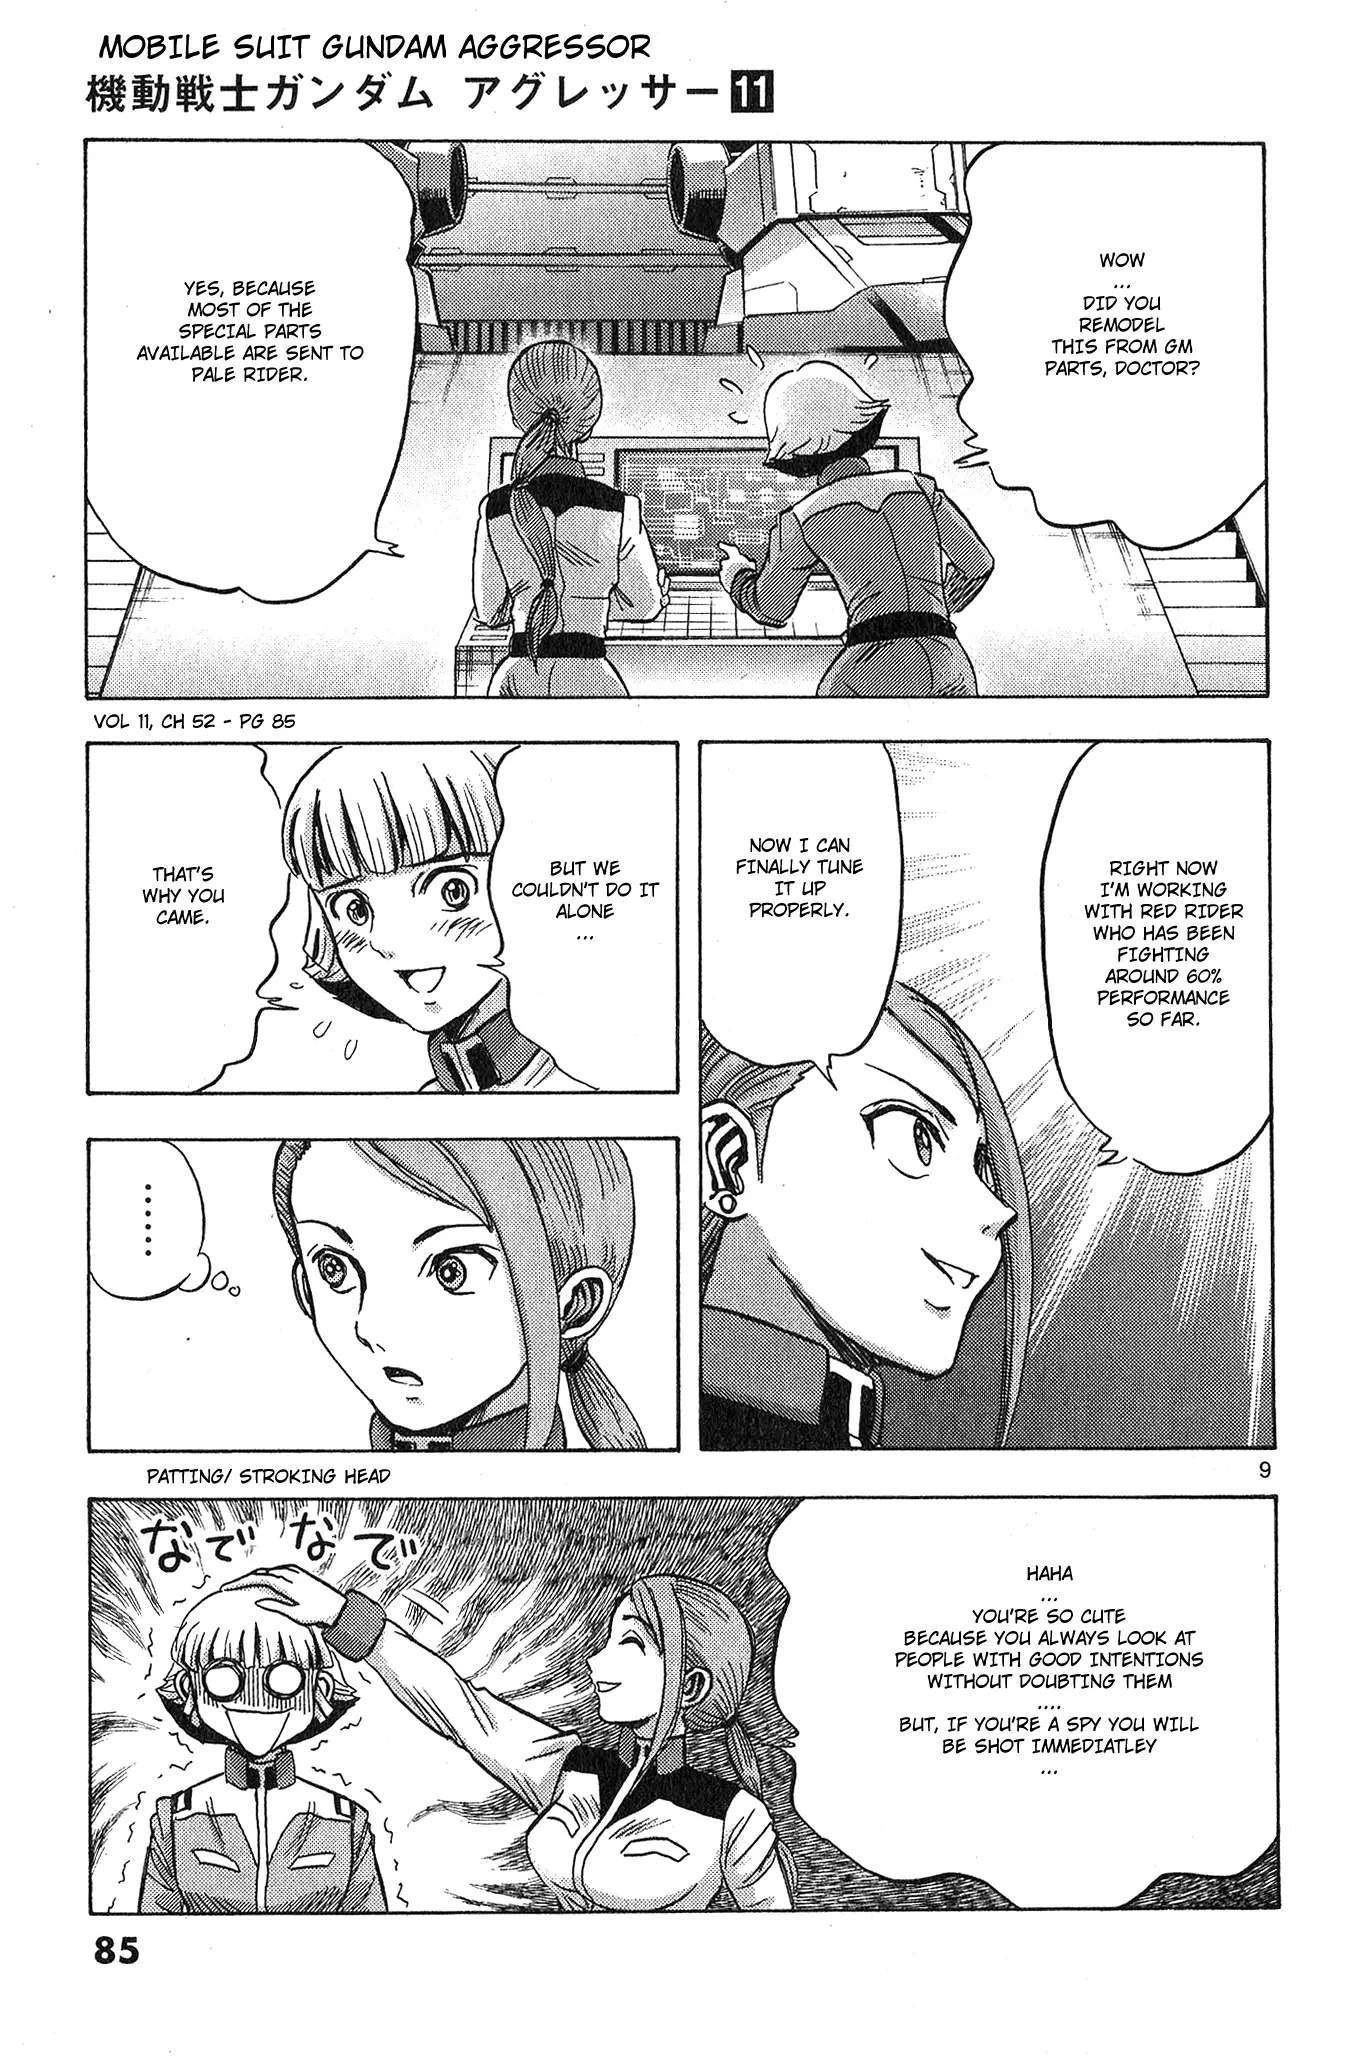 Mobile Suit Gundam Aggressor - 52 page 9-95f5341b